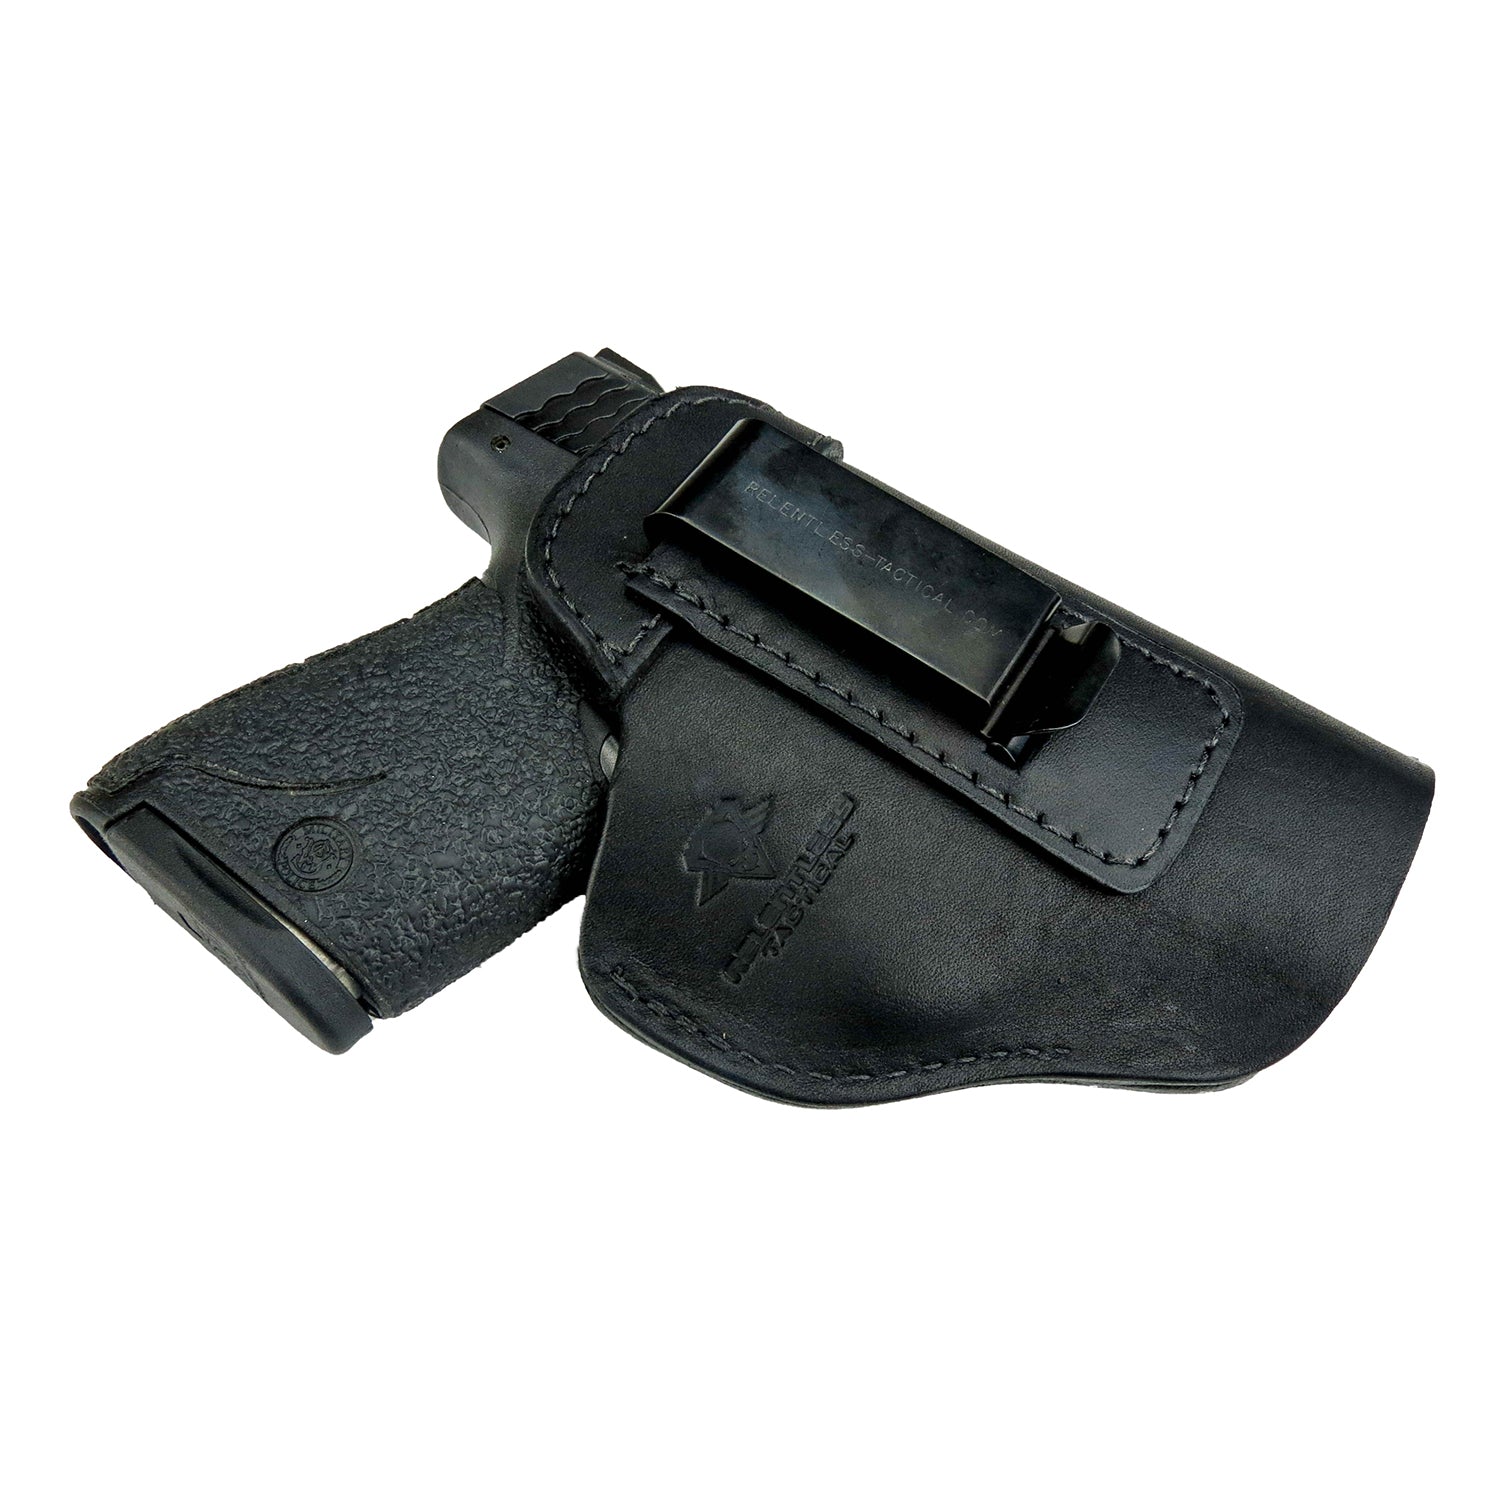 glock 19 gen 4 leather holster